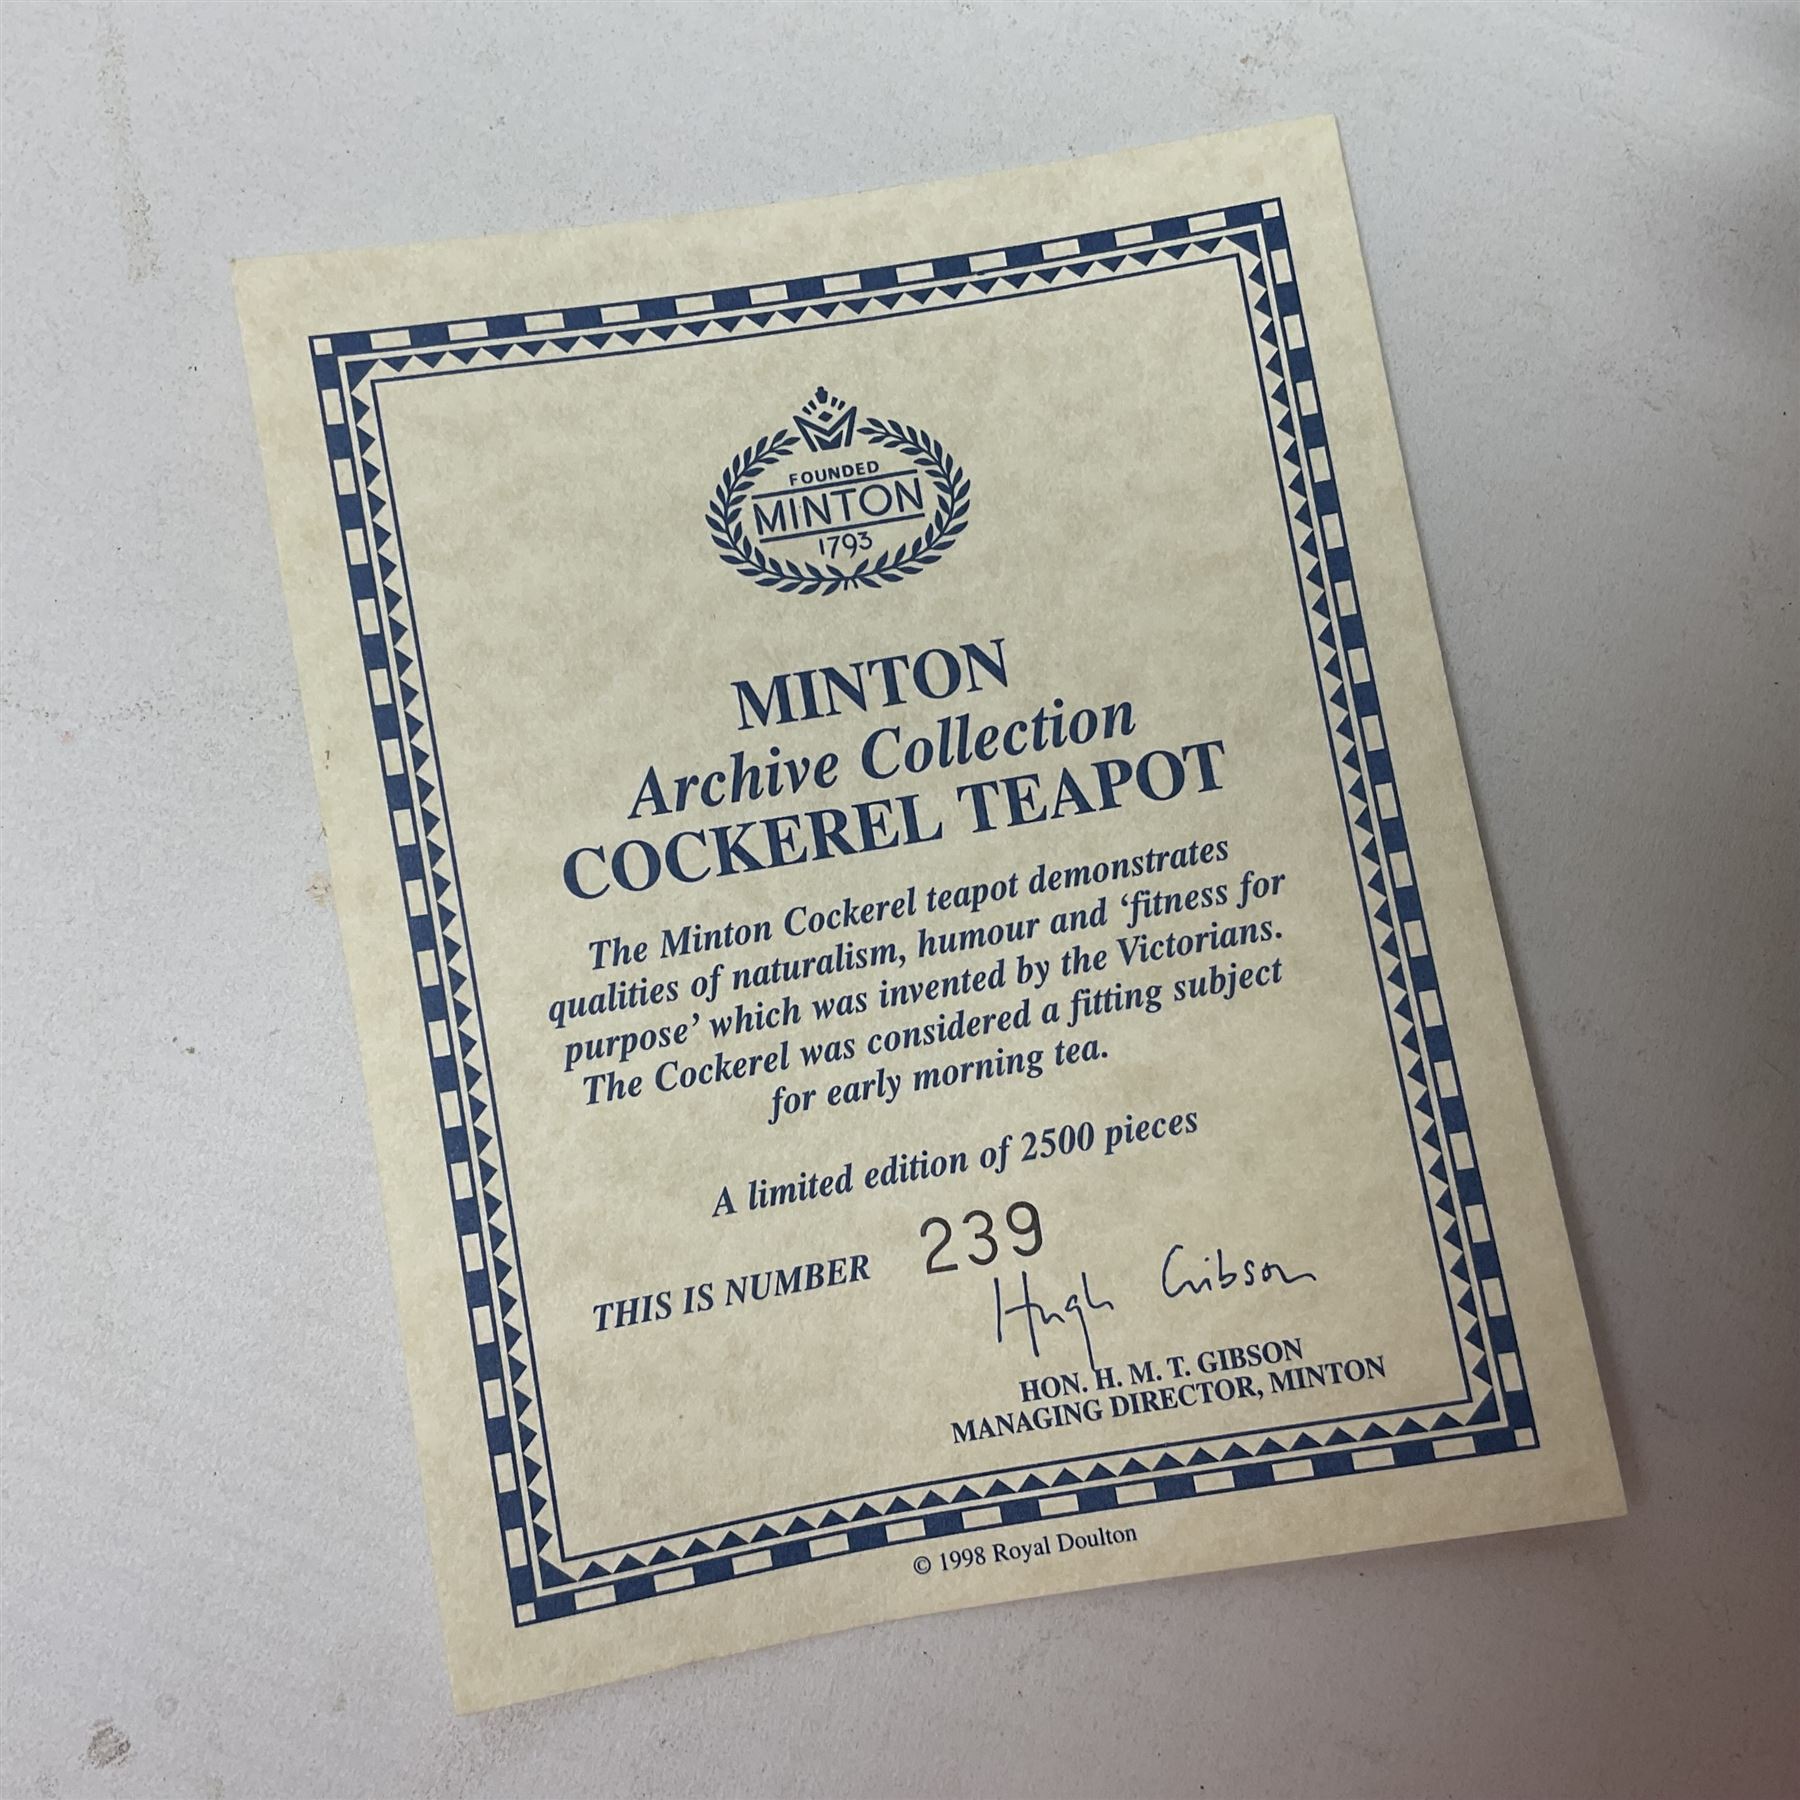 Minton Archive collection cockerel teapot - Image 12 of 12